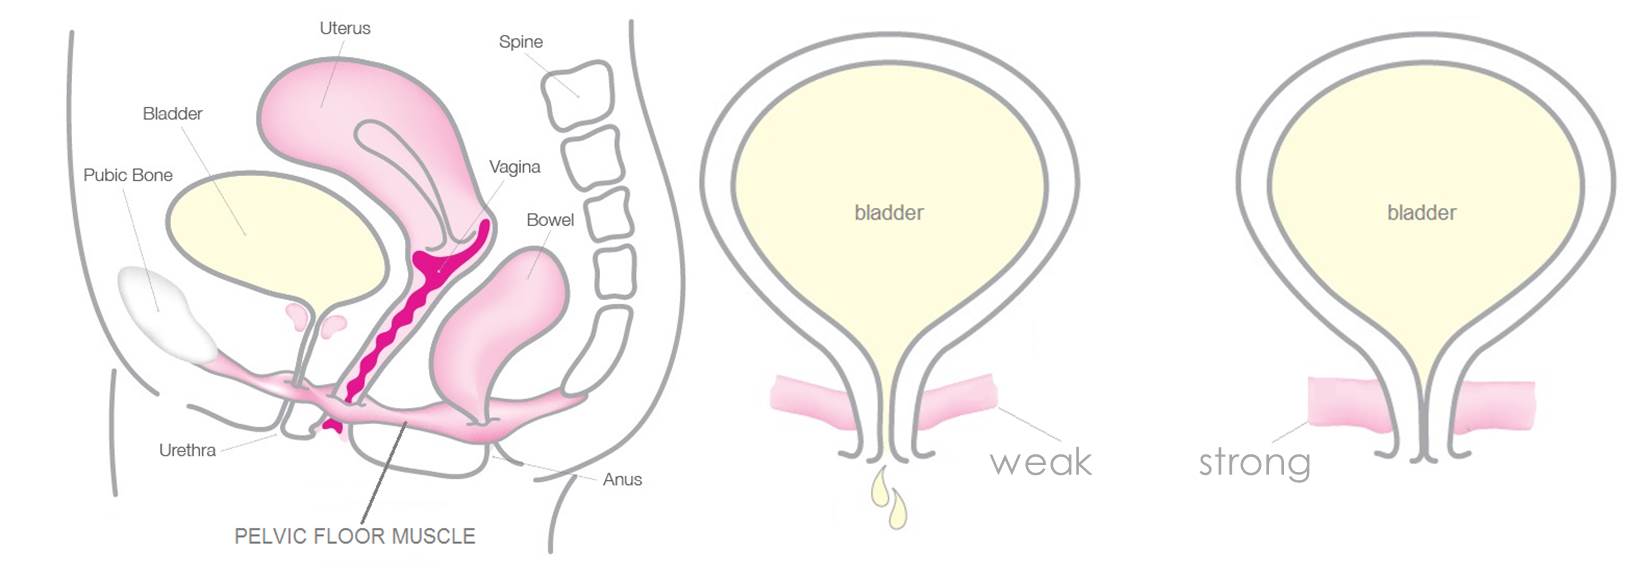 pelvic-muslce-bladder-comparison-diagram.jpg